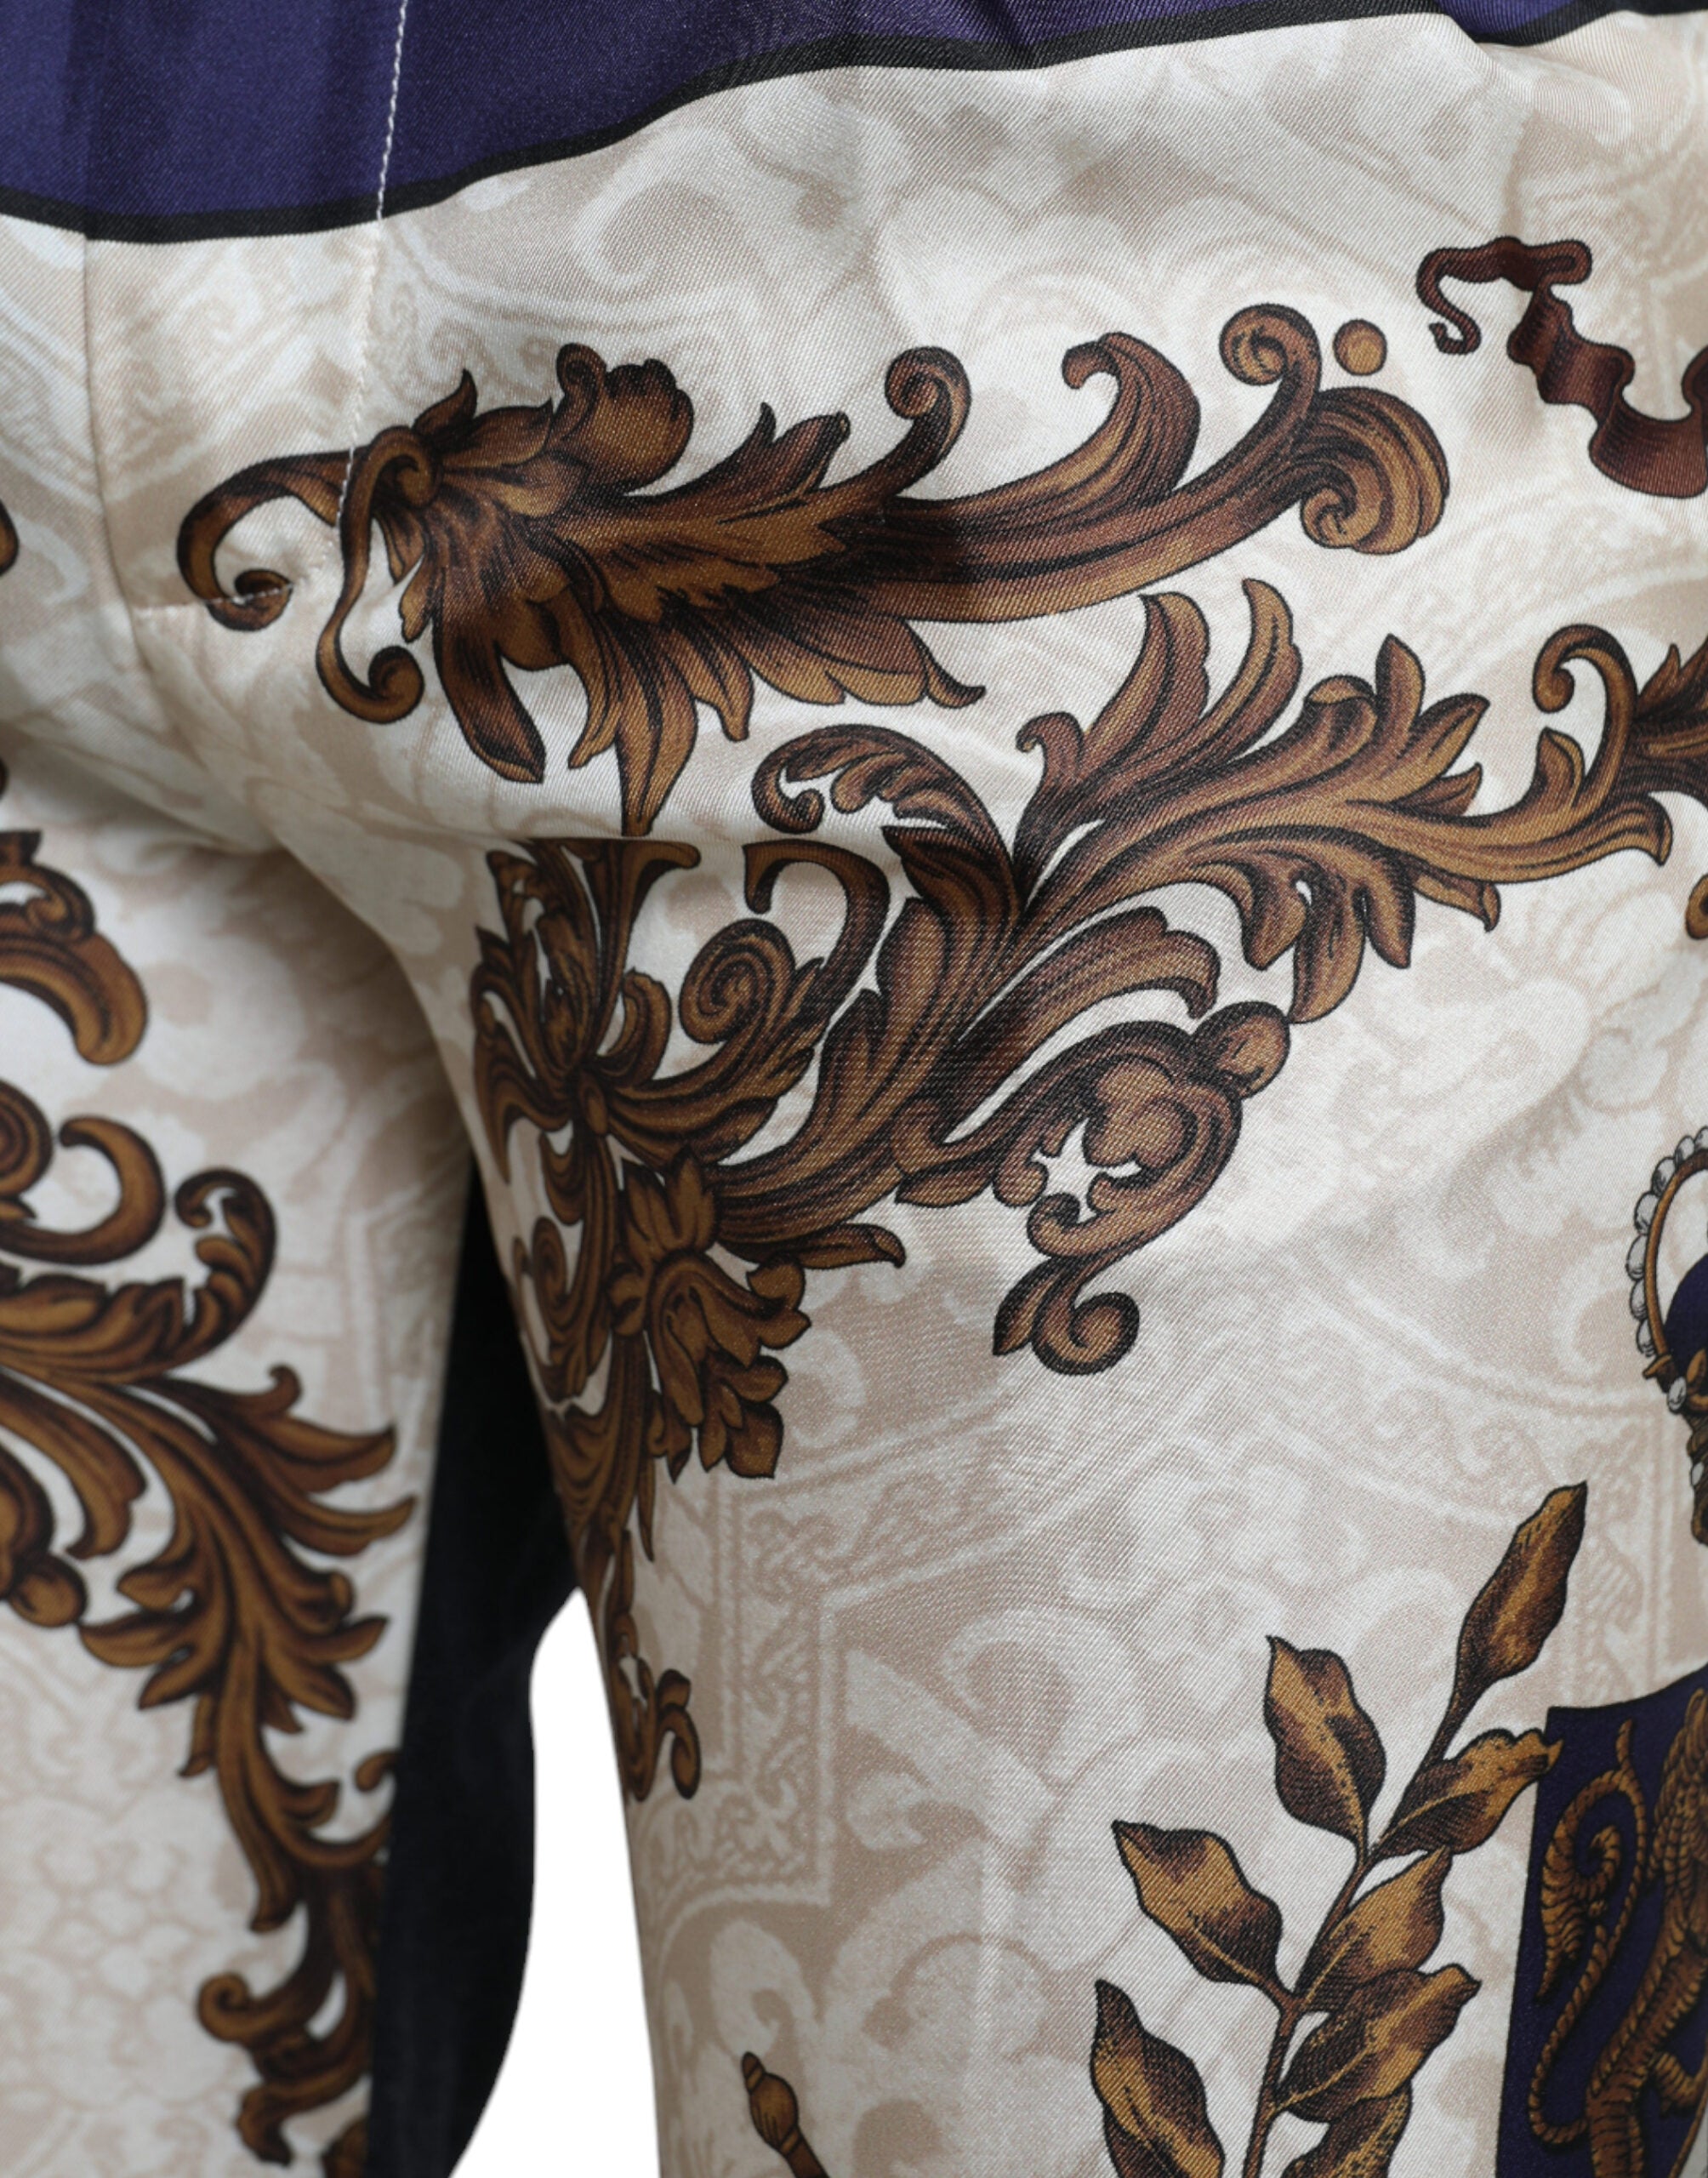 Dolce & Gabbana Elegant Silk Skinny Pants with Heraldic Print